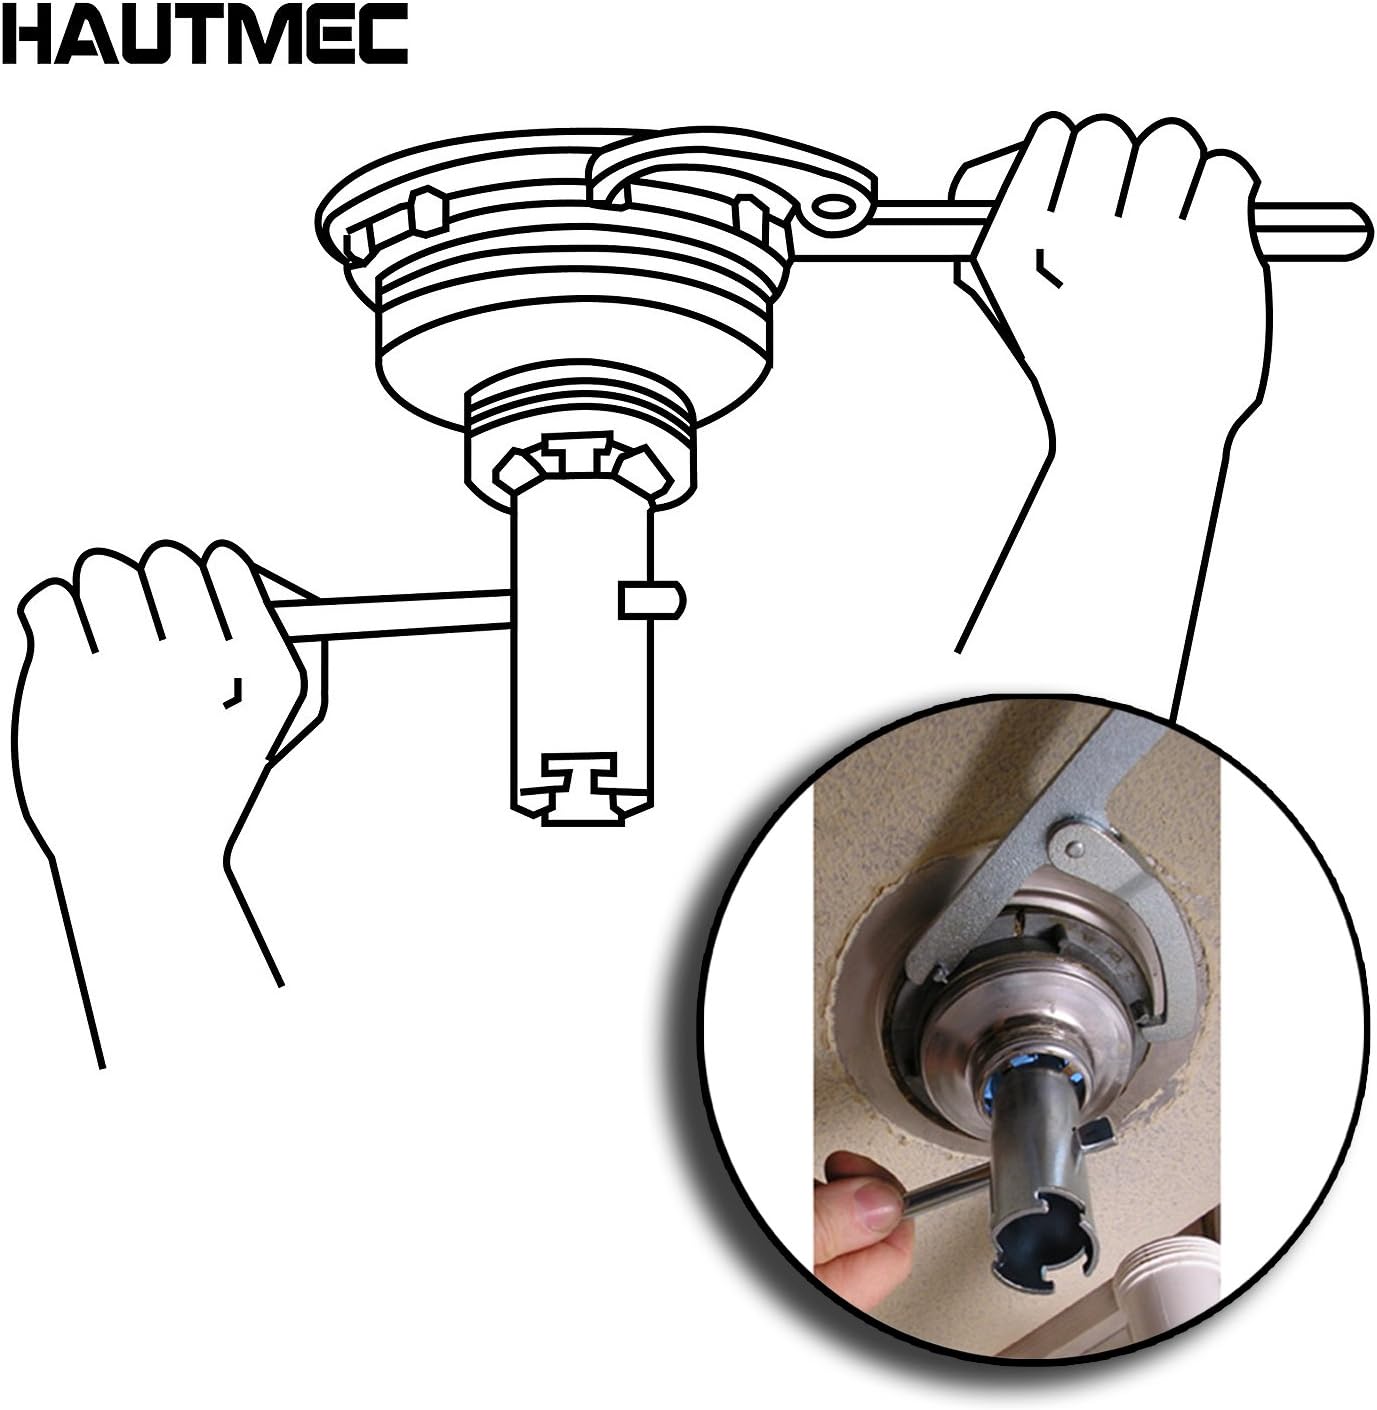 HAUTMEC Sink Strainer Lock Nut Wrench PL0038